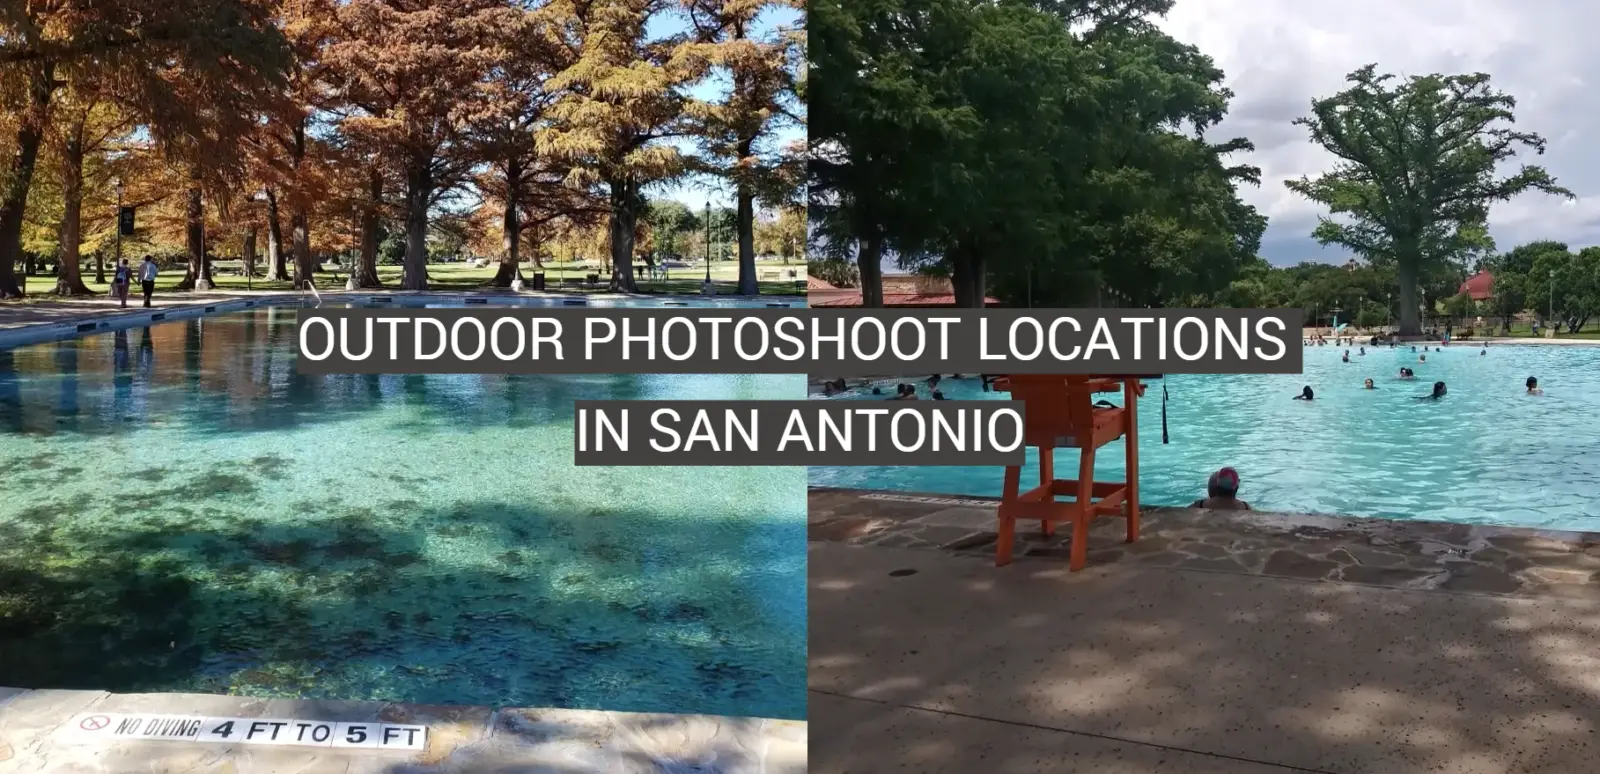 Outdoor Photoshoot Locations in San Antonio